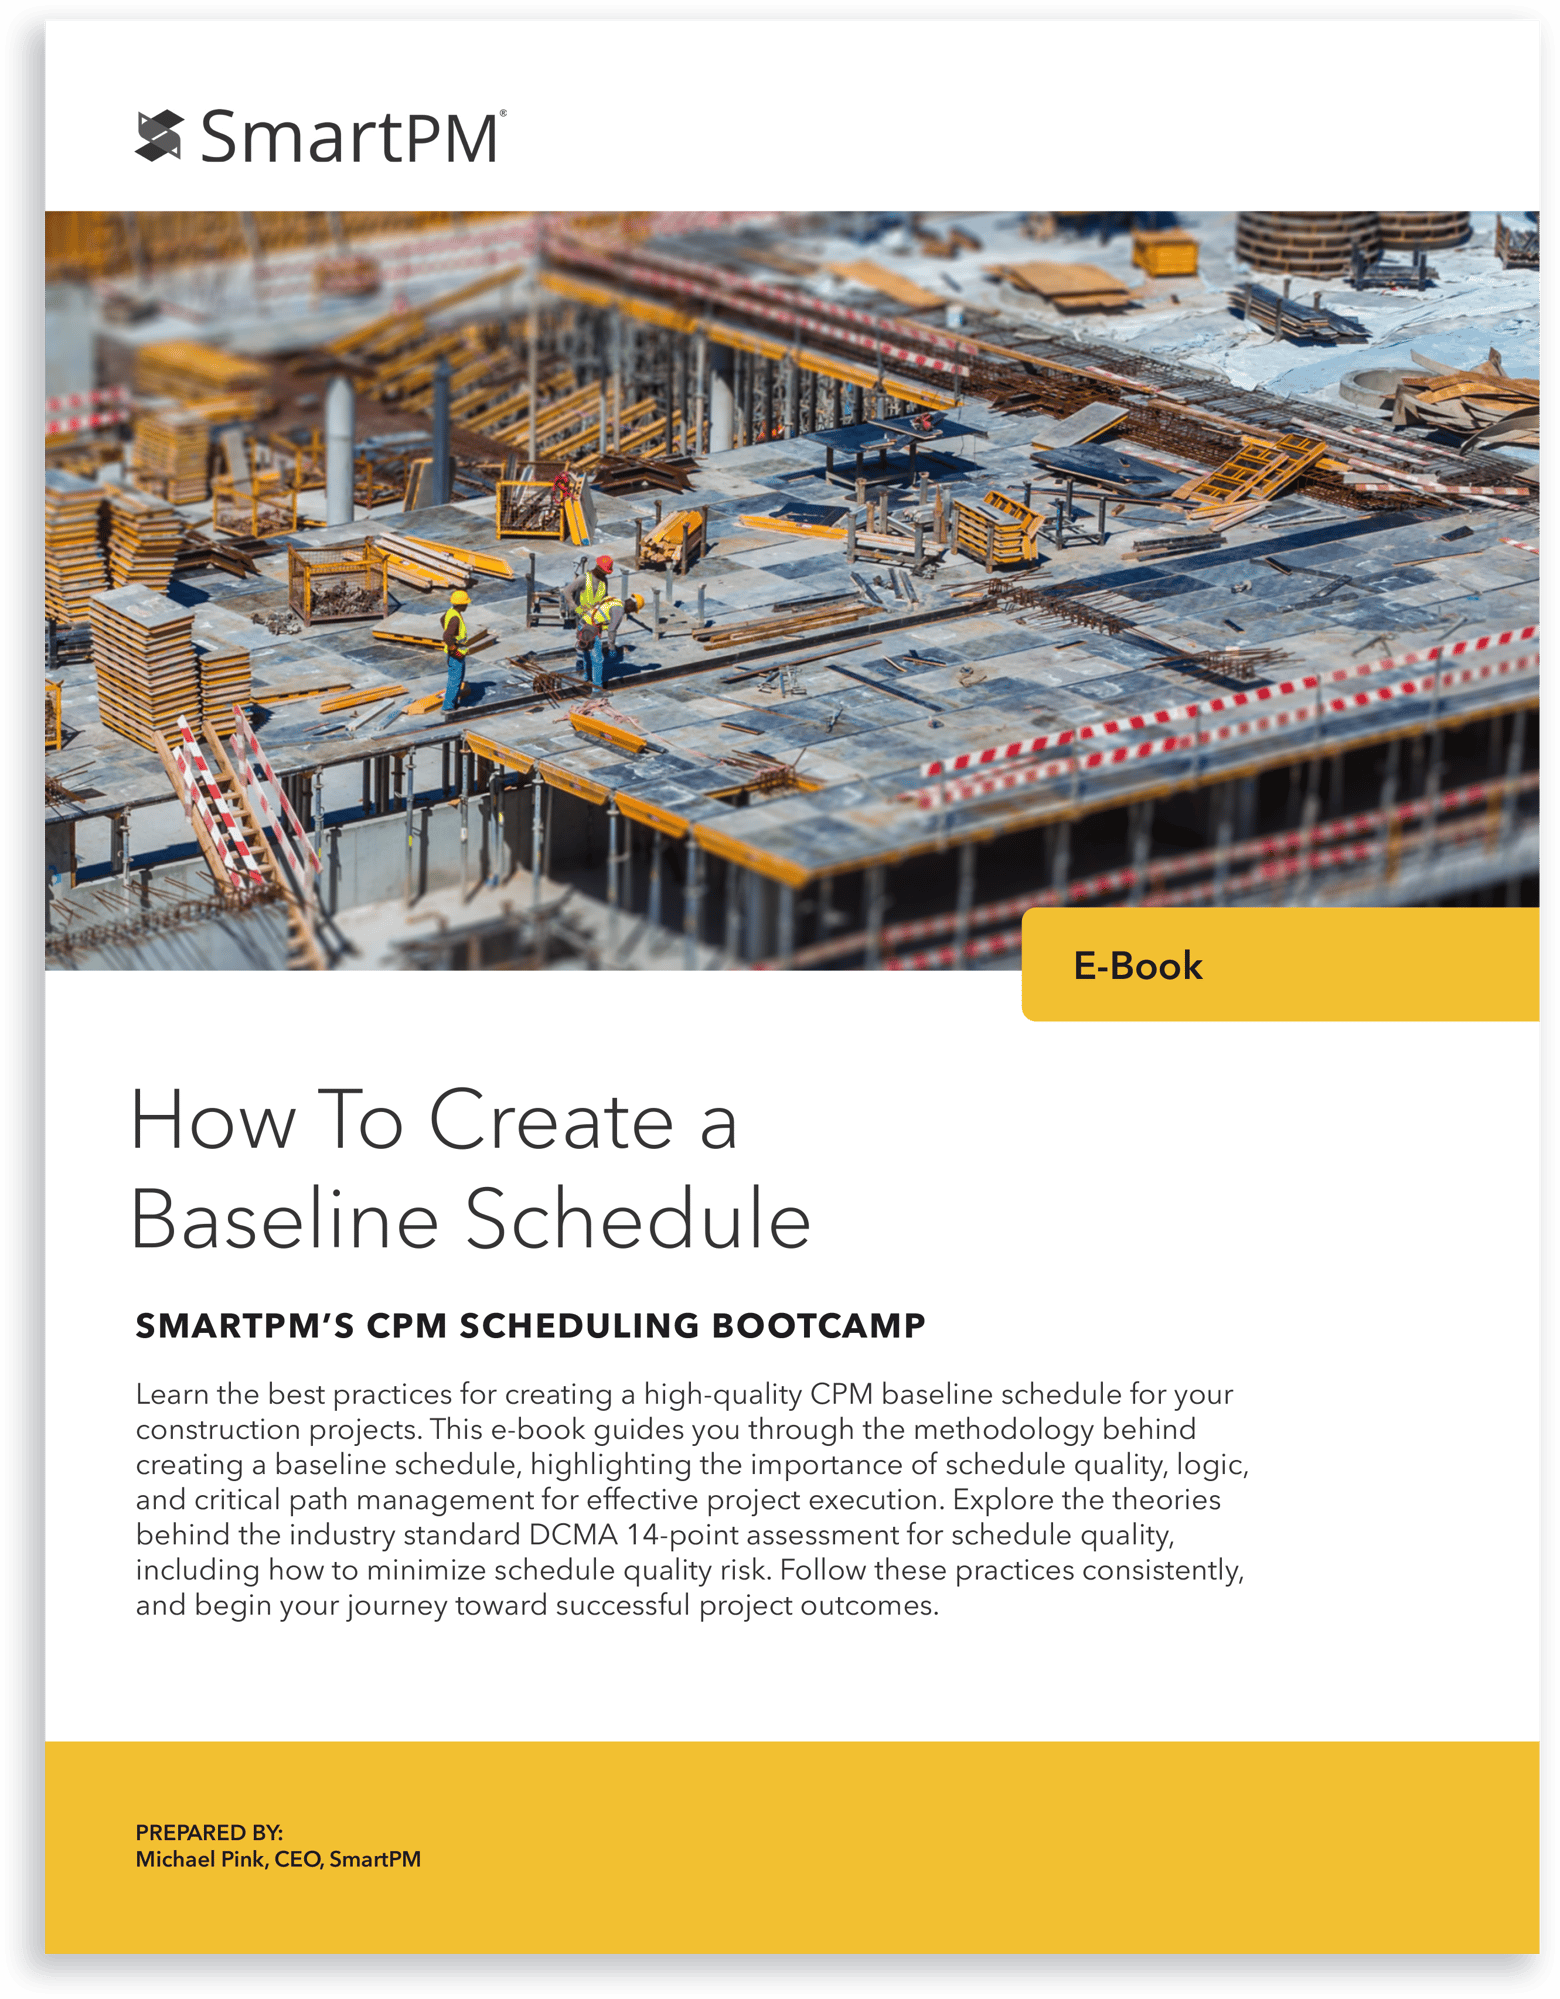 Baseline-schedule-ebook-thumbnail